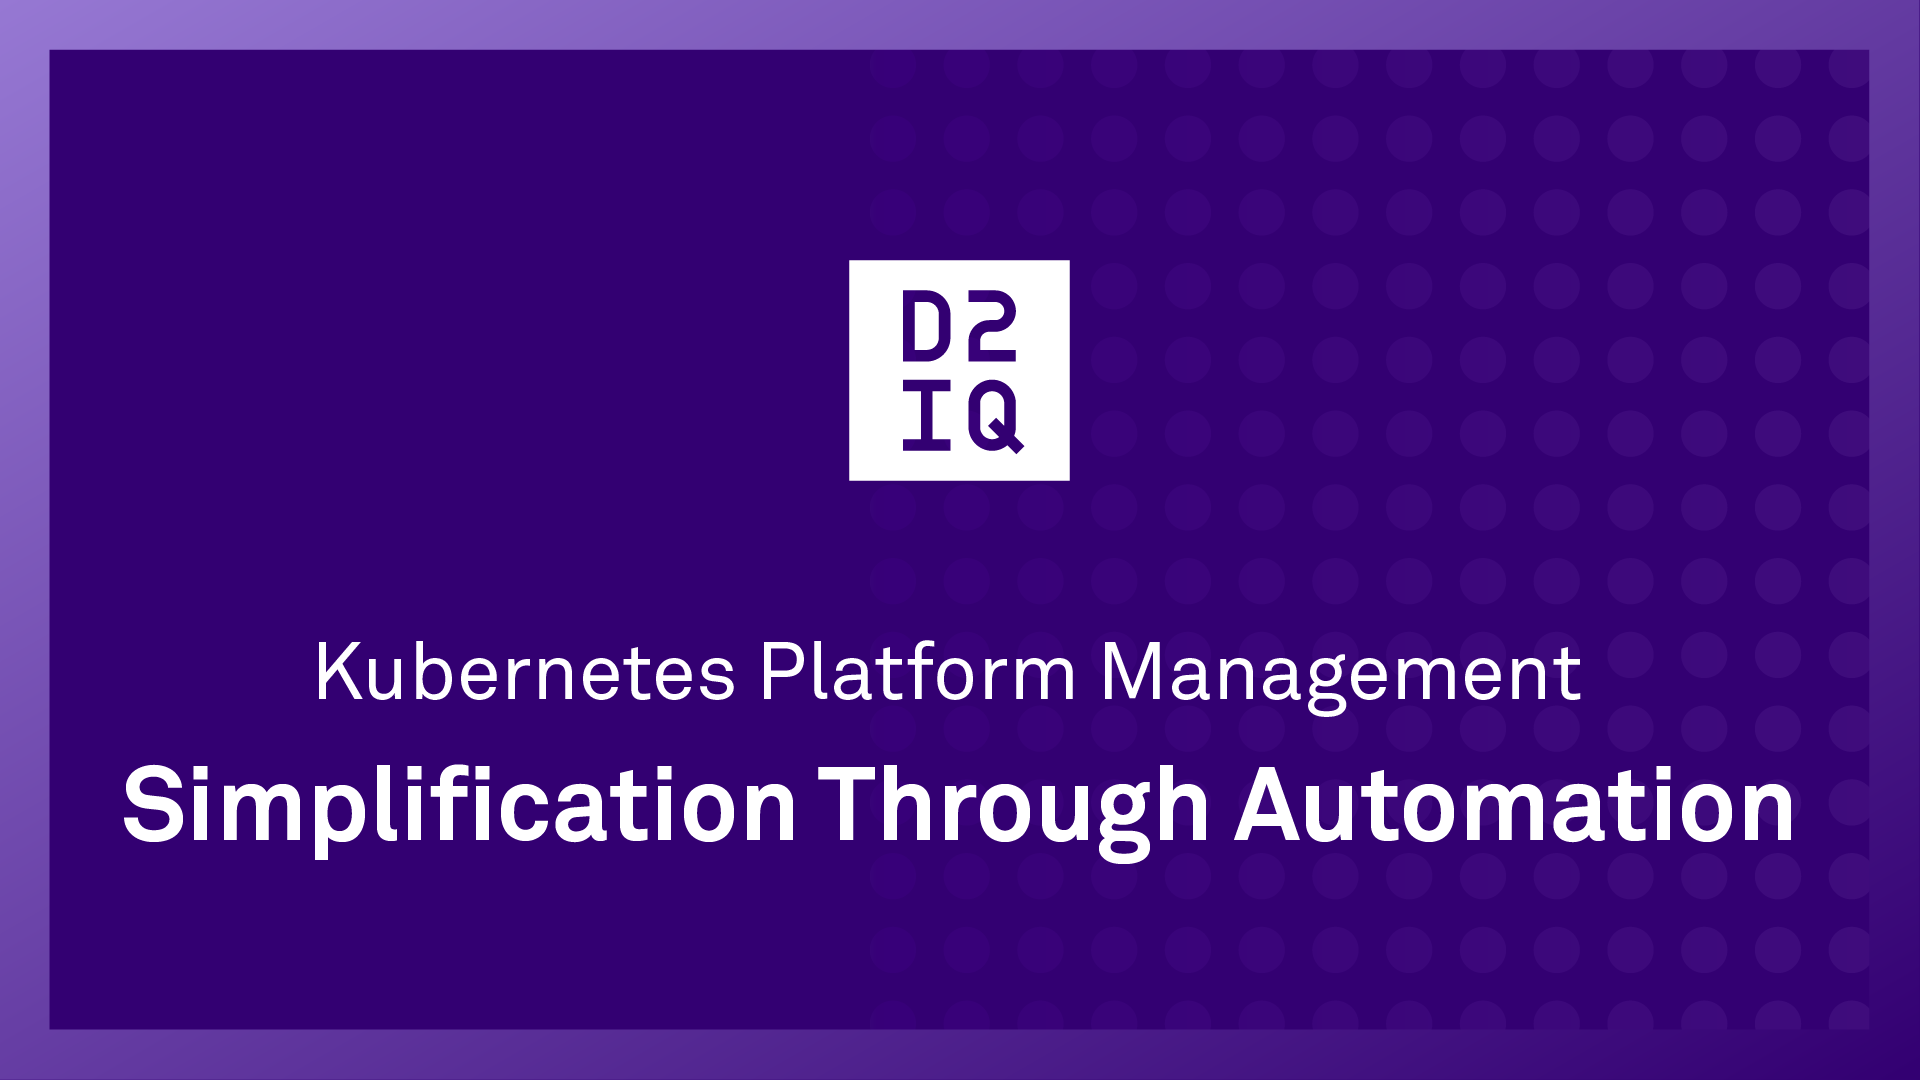 Kubernetes Platform Management: Simplification Through Automation